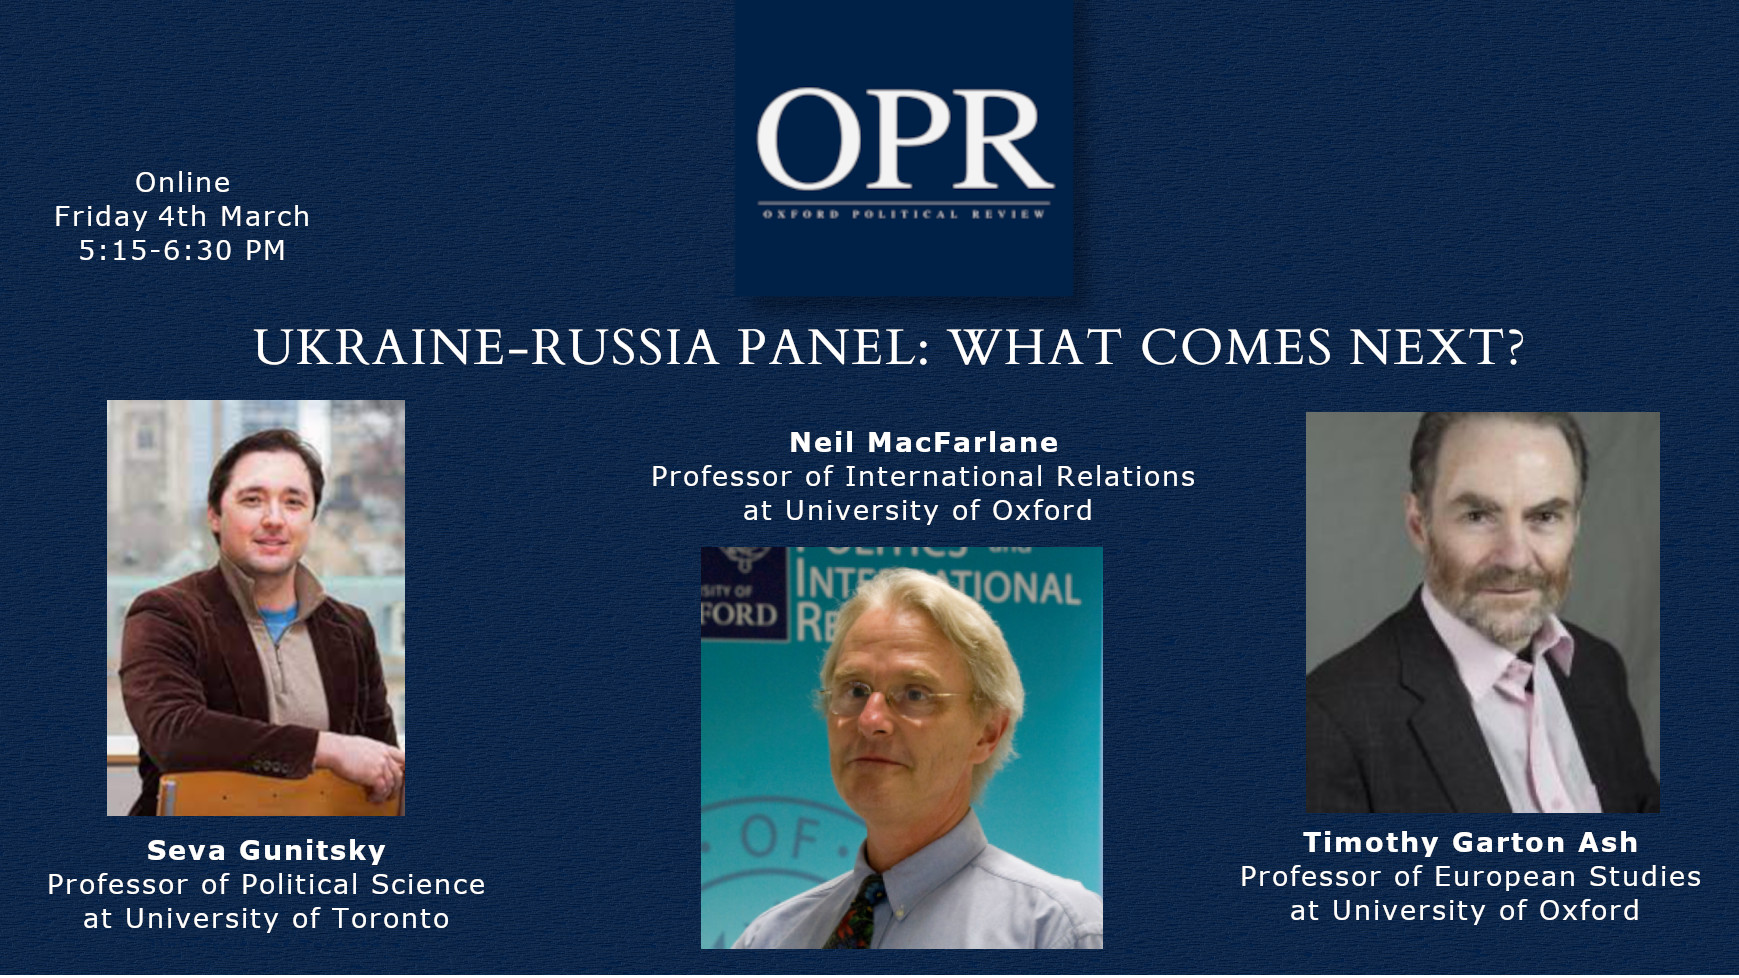 OPR Announces Ukraine-Russia Panel Discussion